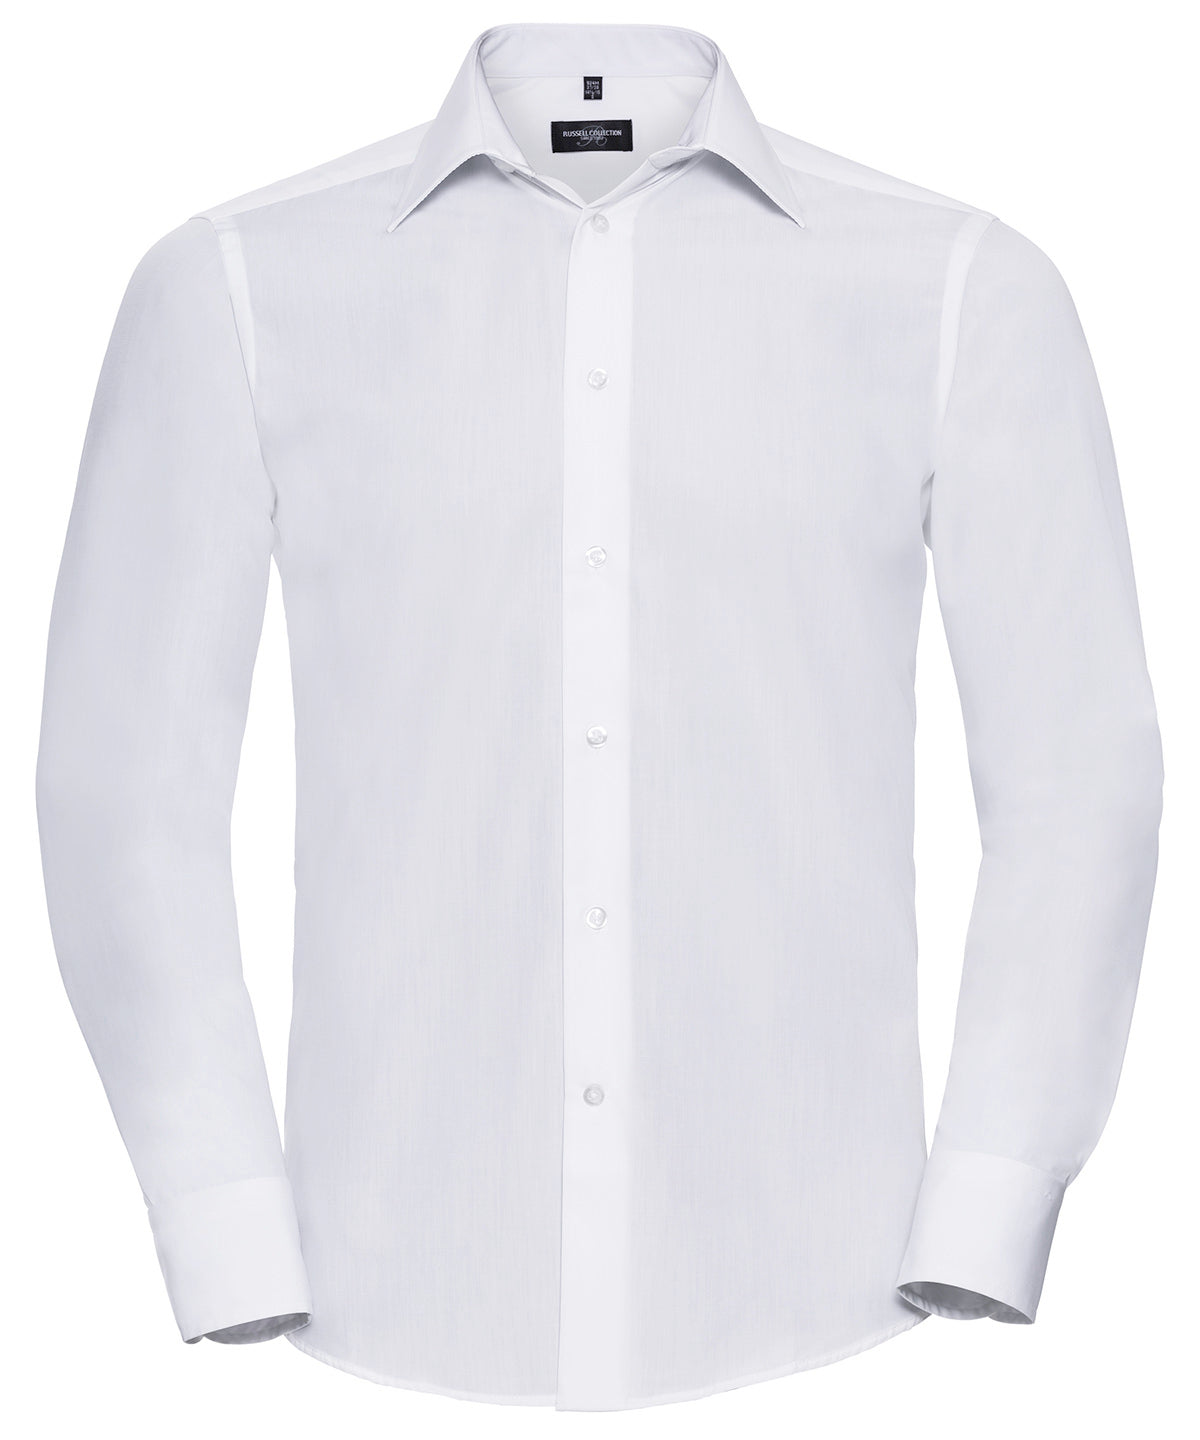 Bolir - Long Sleeve Polycotton Easycare Fitted Poplin Shirt